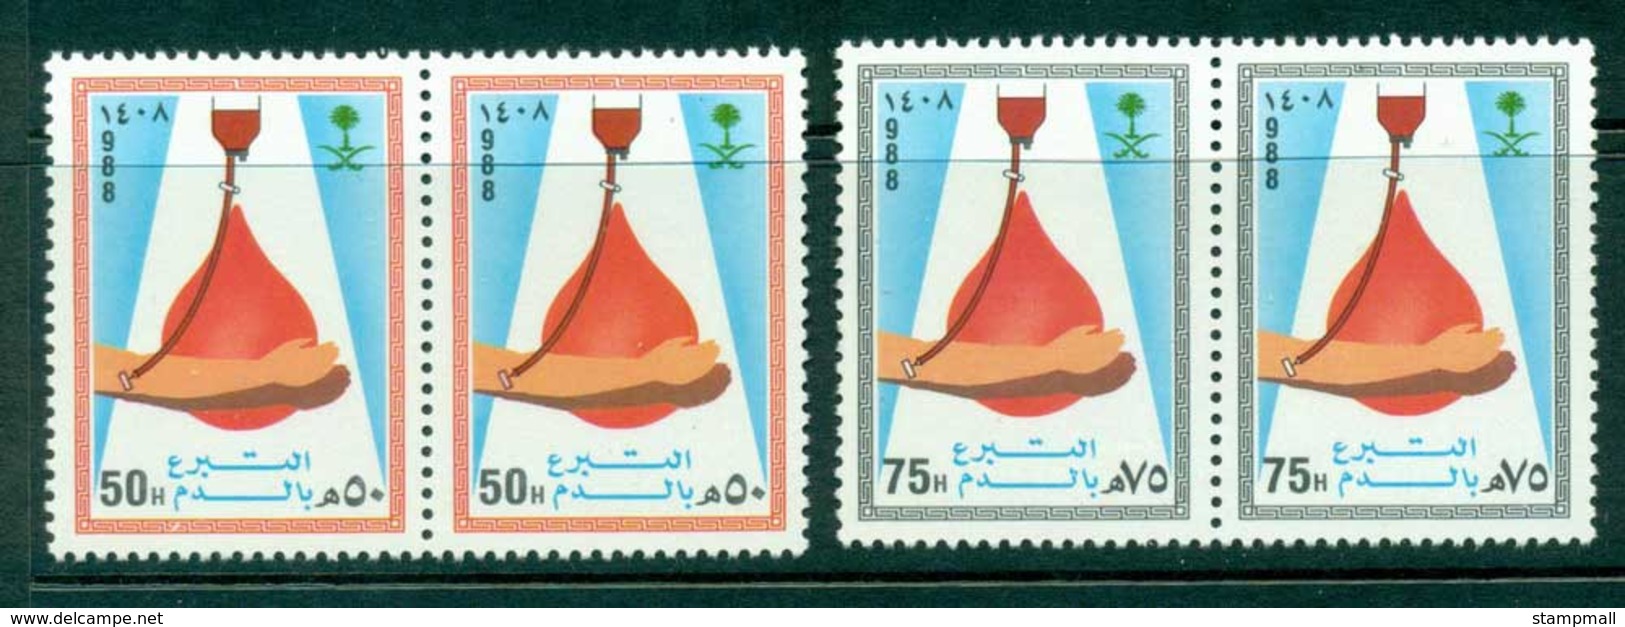 Saudi Arabia 1988 Blood Donation Pair MUH Lot26754 - Saudi Arabia